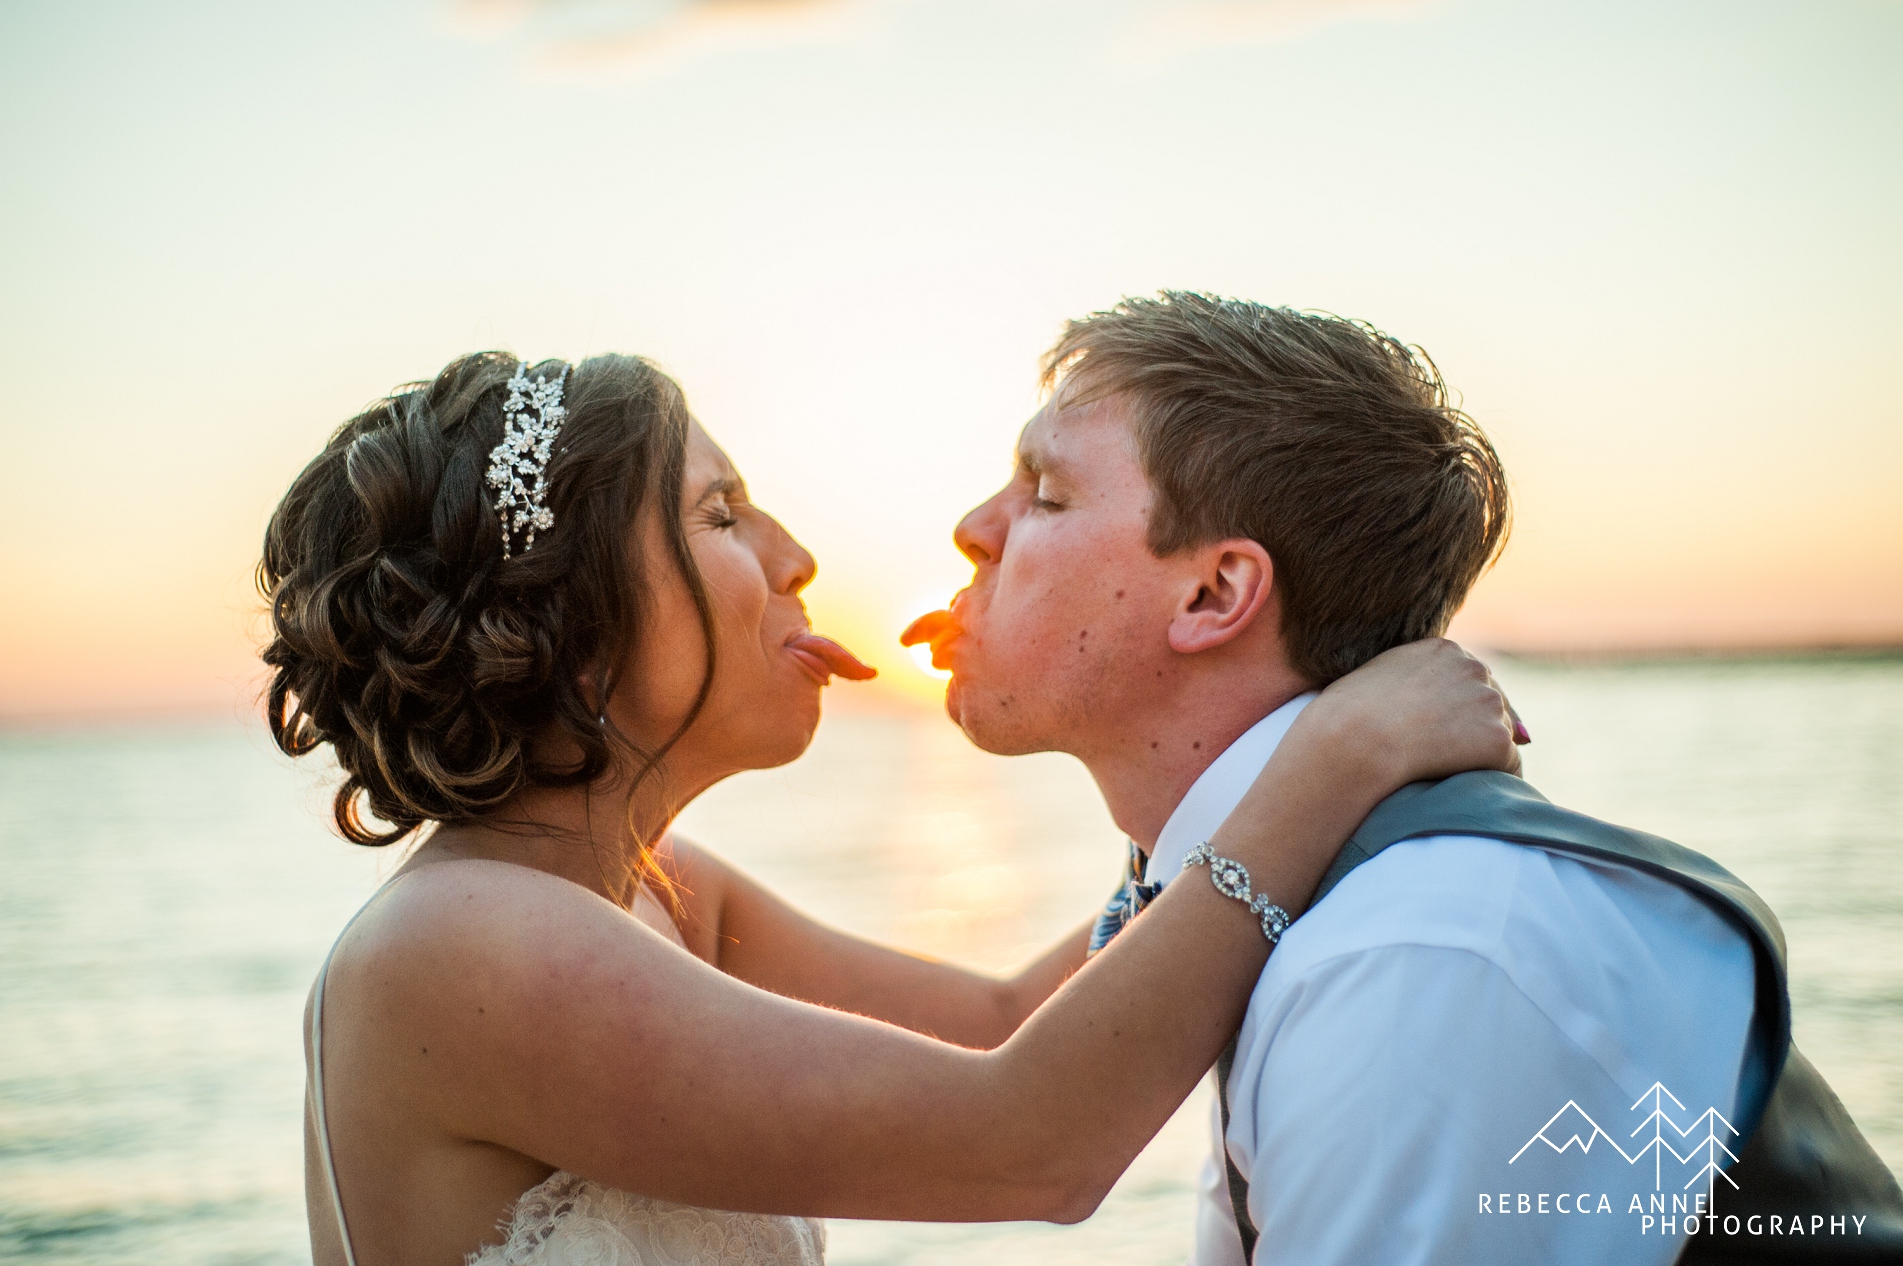 Ed & Brooke's Chesapeake Bay Beach Club Wedding by destination wedding photographer Rebecca Anne Photography.